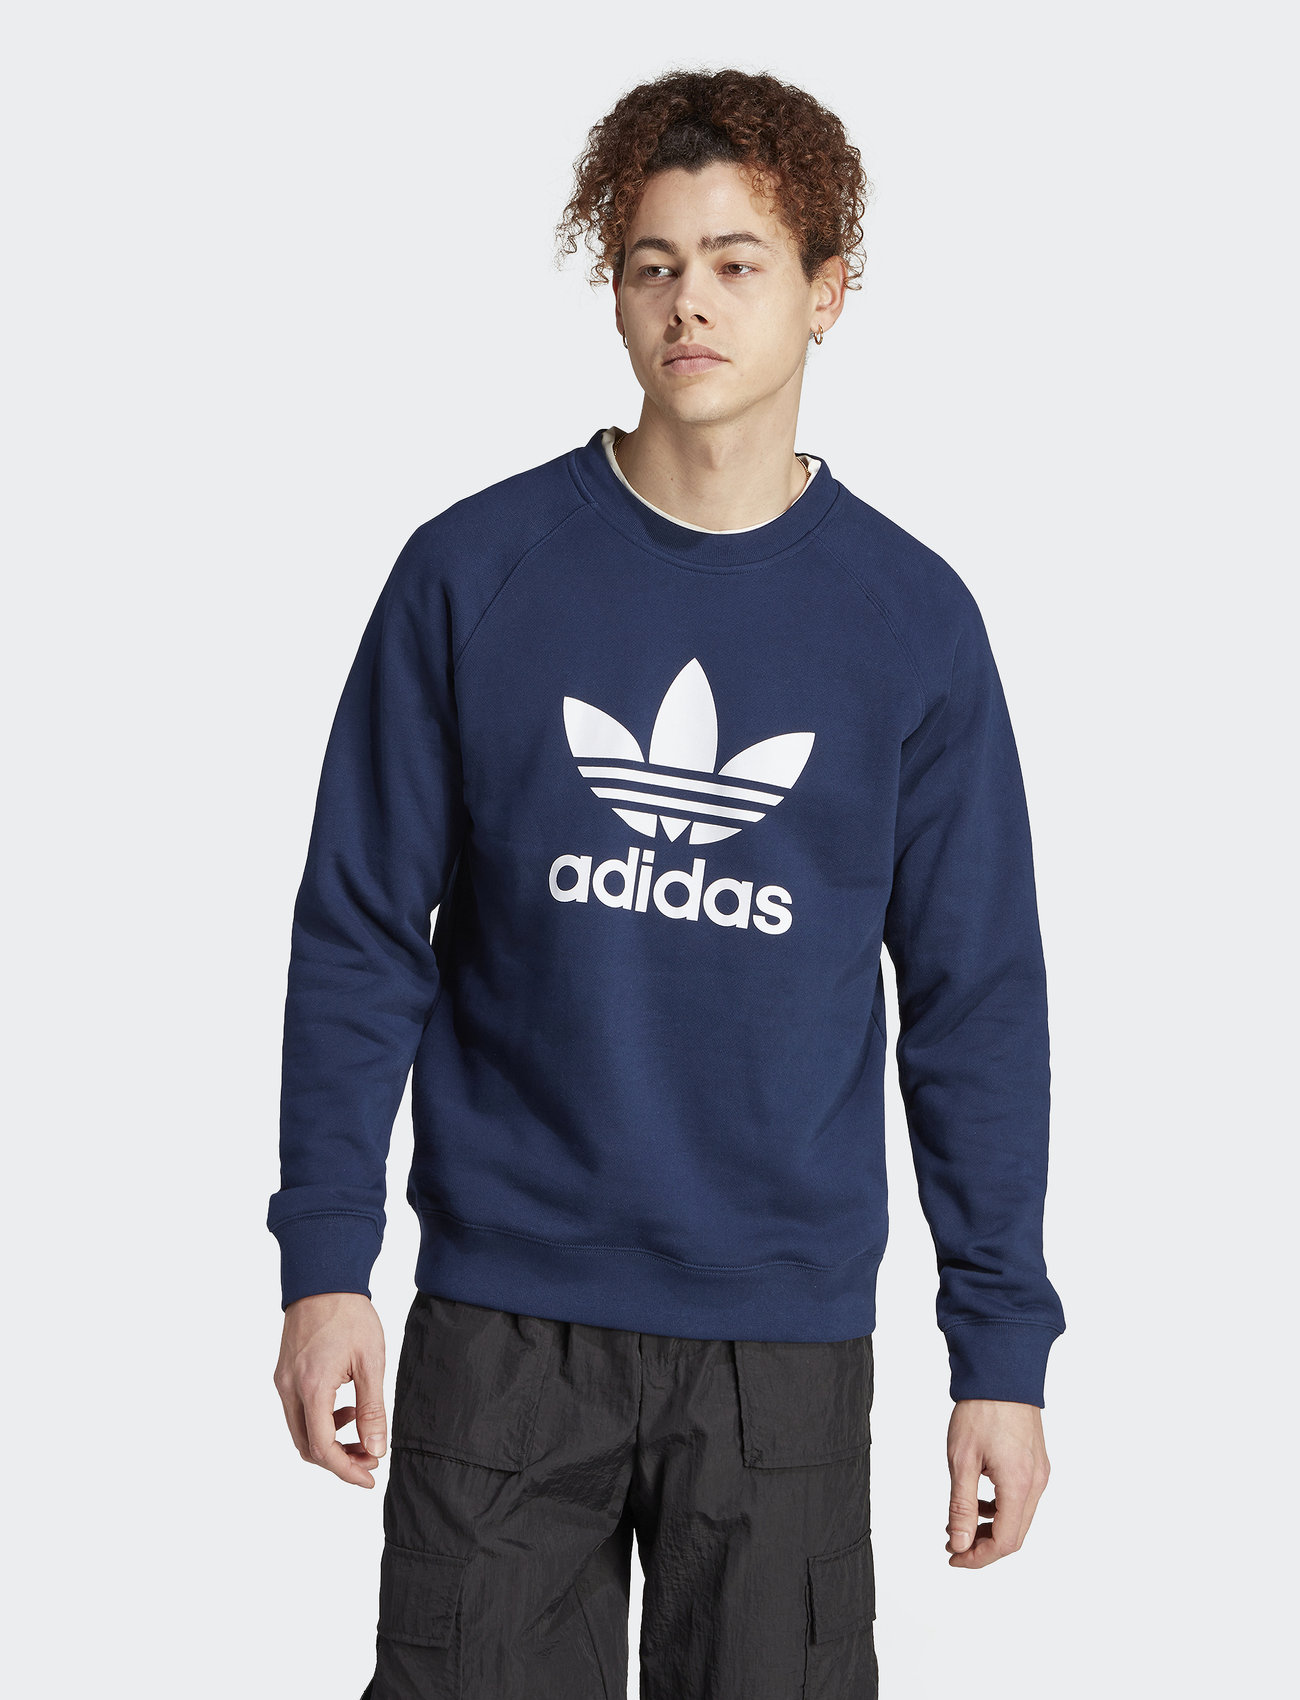 Fortløbende I mængde skive adidas Originals Adicolor Classics Trefoil Crewneck Sweatshirt -  Sweatshirts | Boozt.com